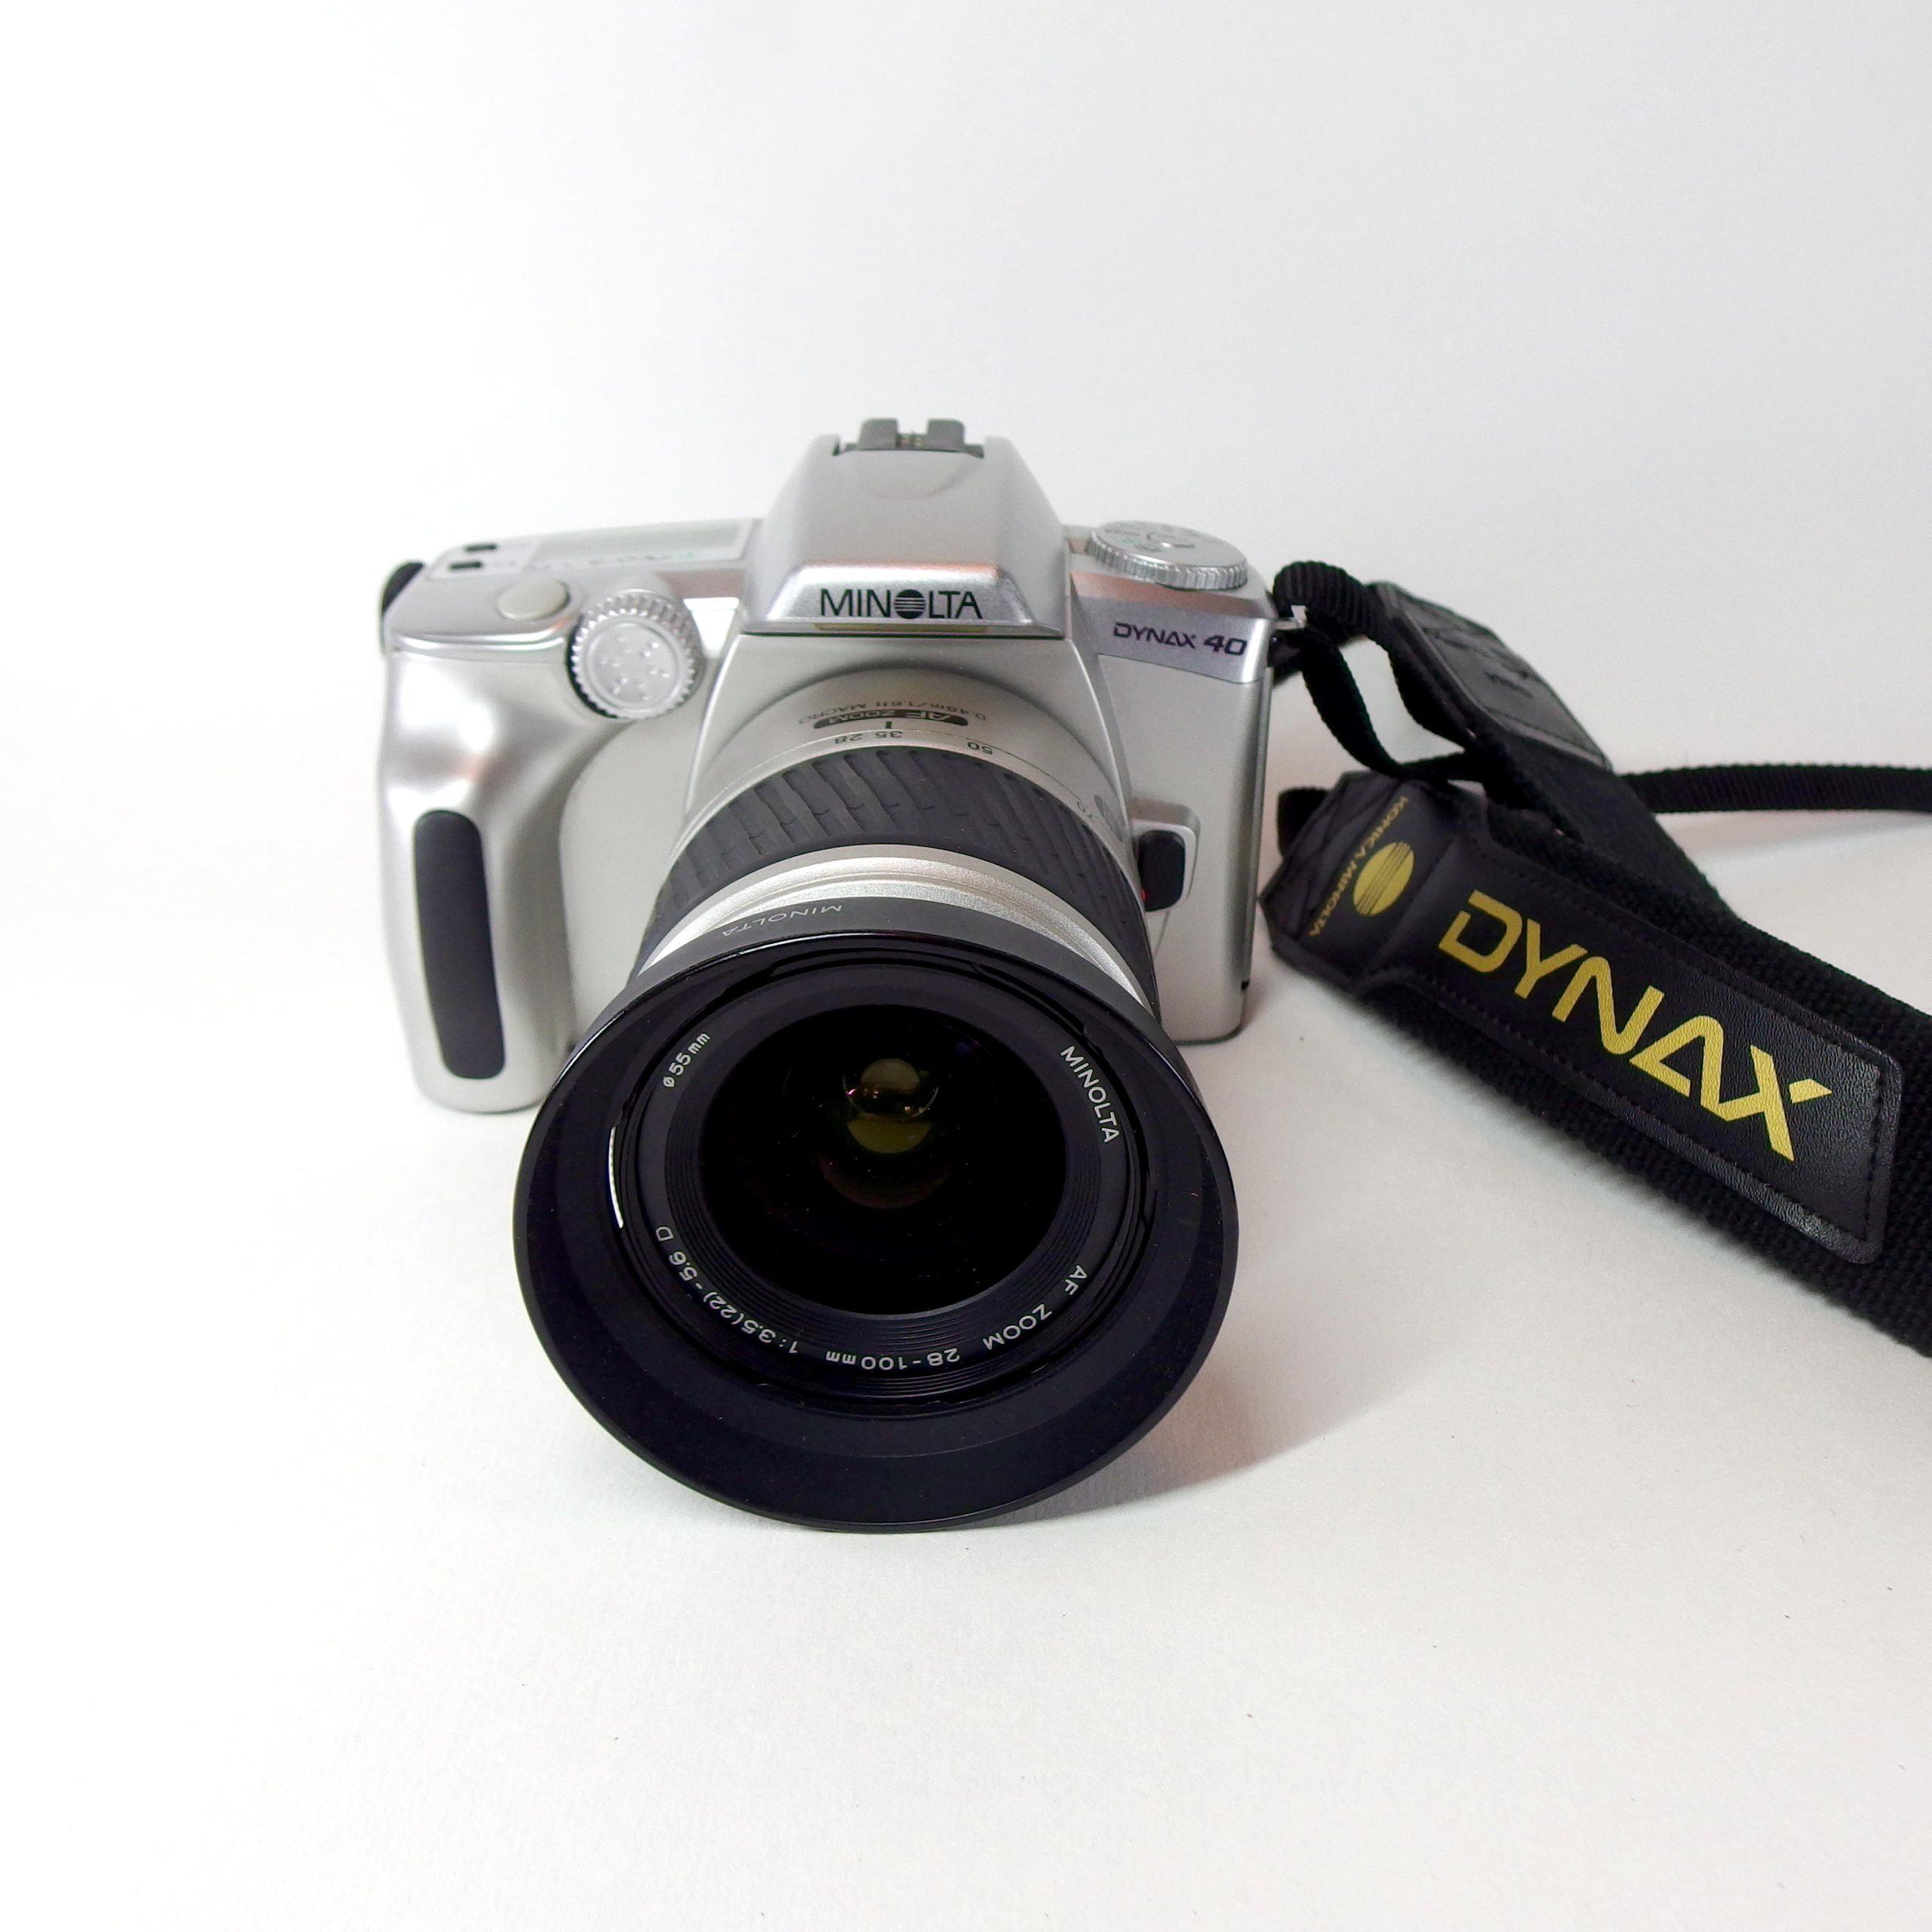 Minolta Dynax 40 - léger et complet